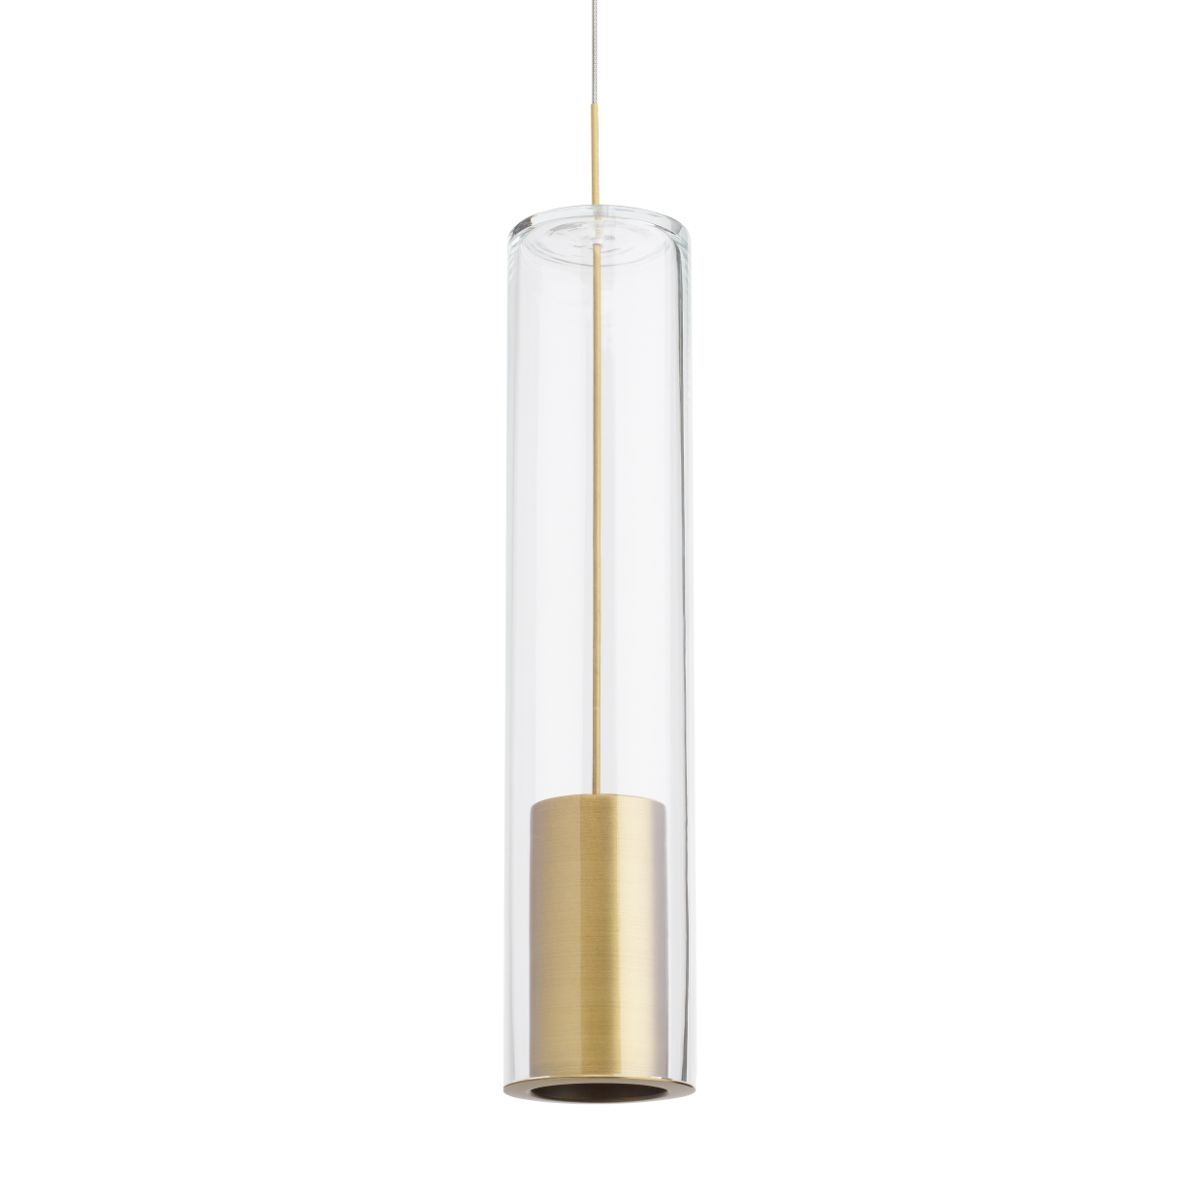 Captra Monorail Cylinder LED Pendant Light 485 Lumens Brass Finish